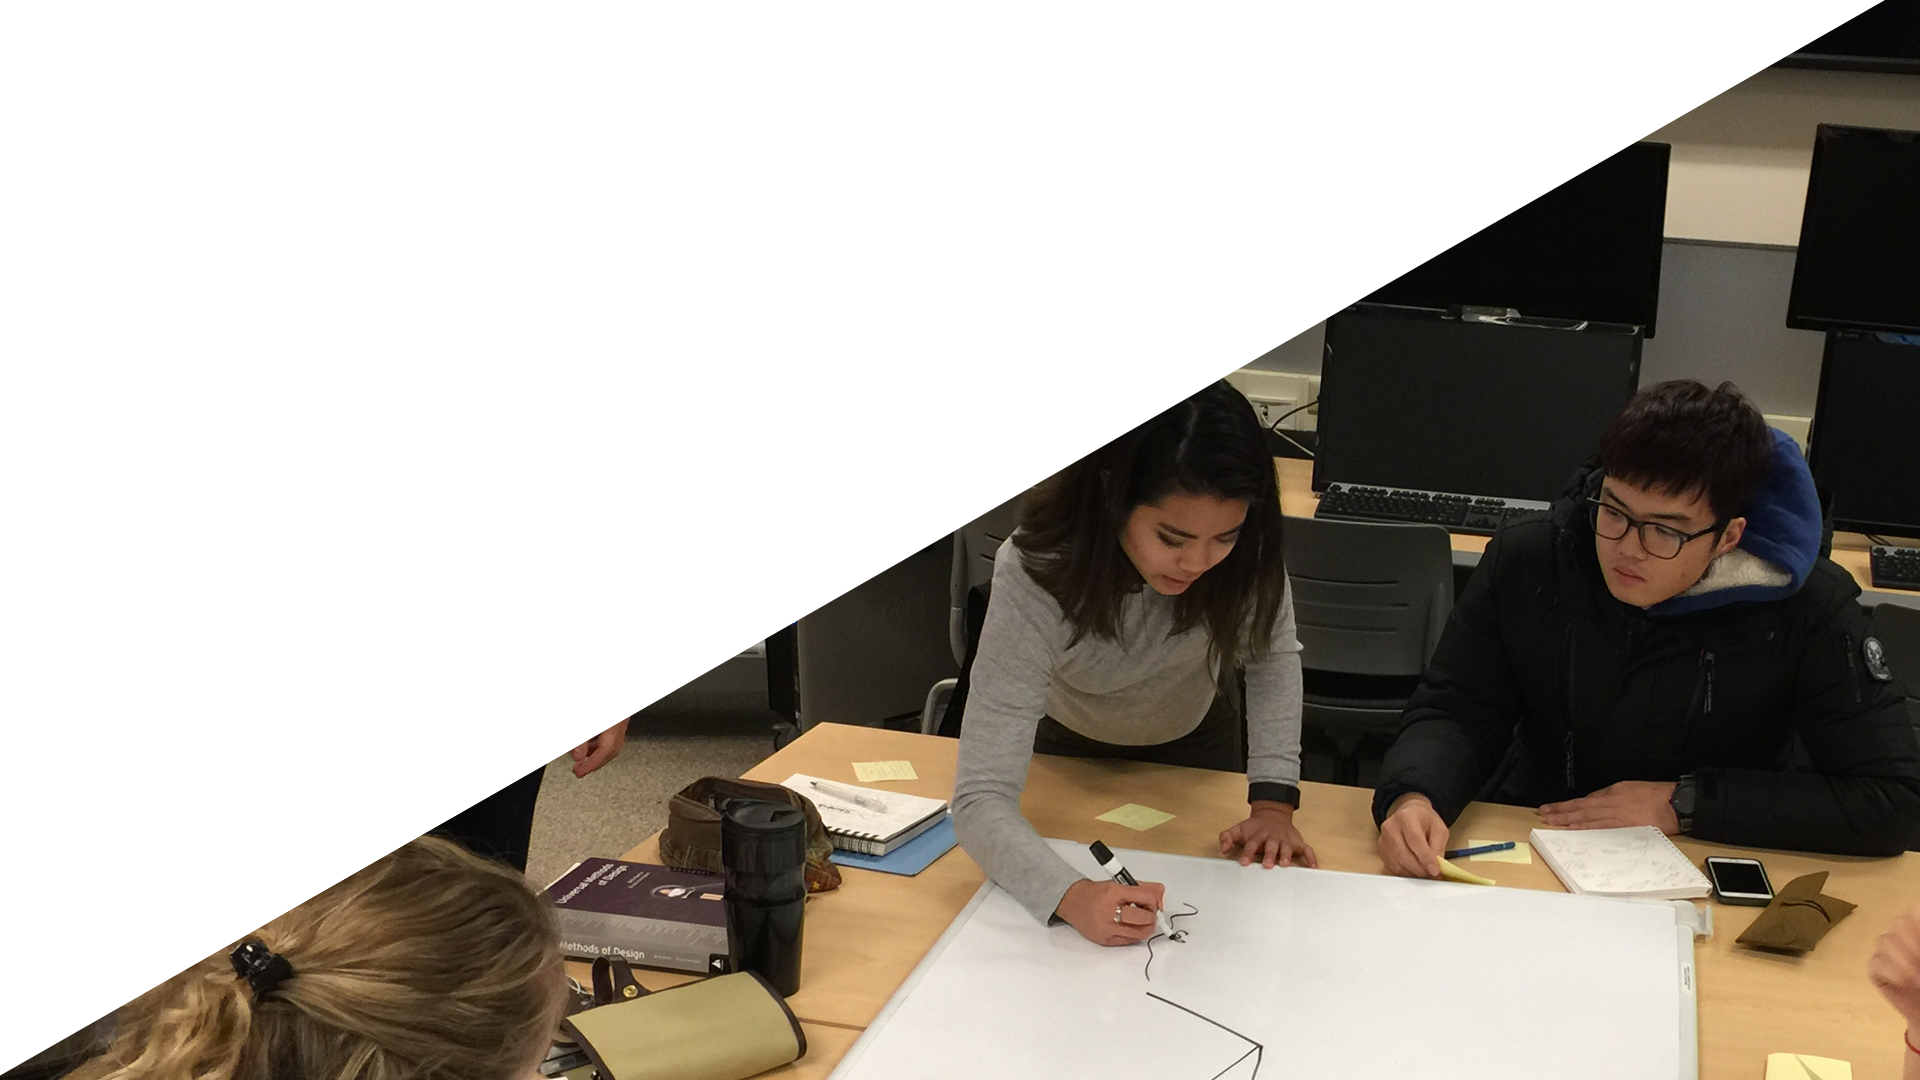 students working together to solve design problem